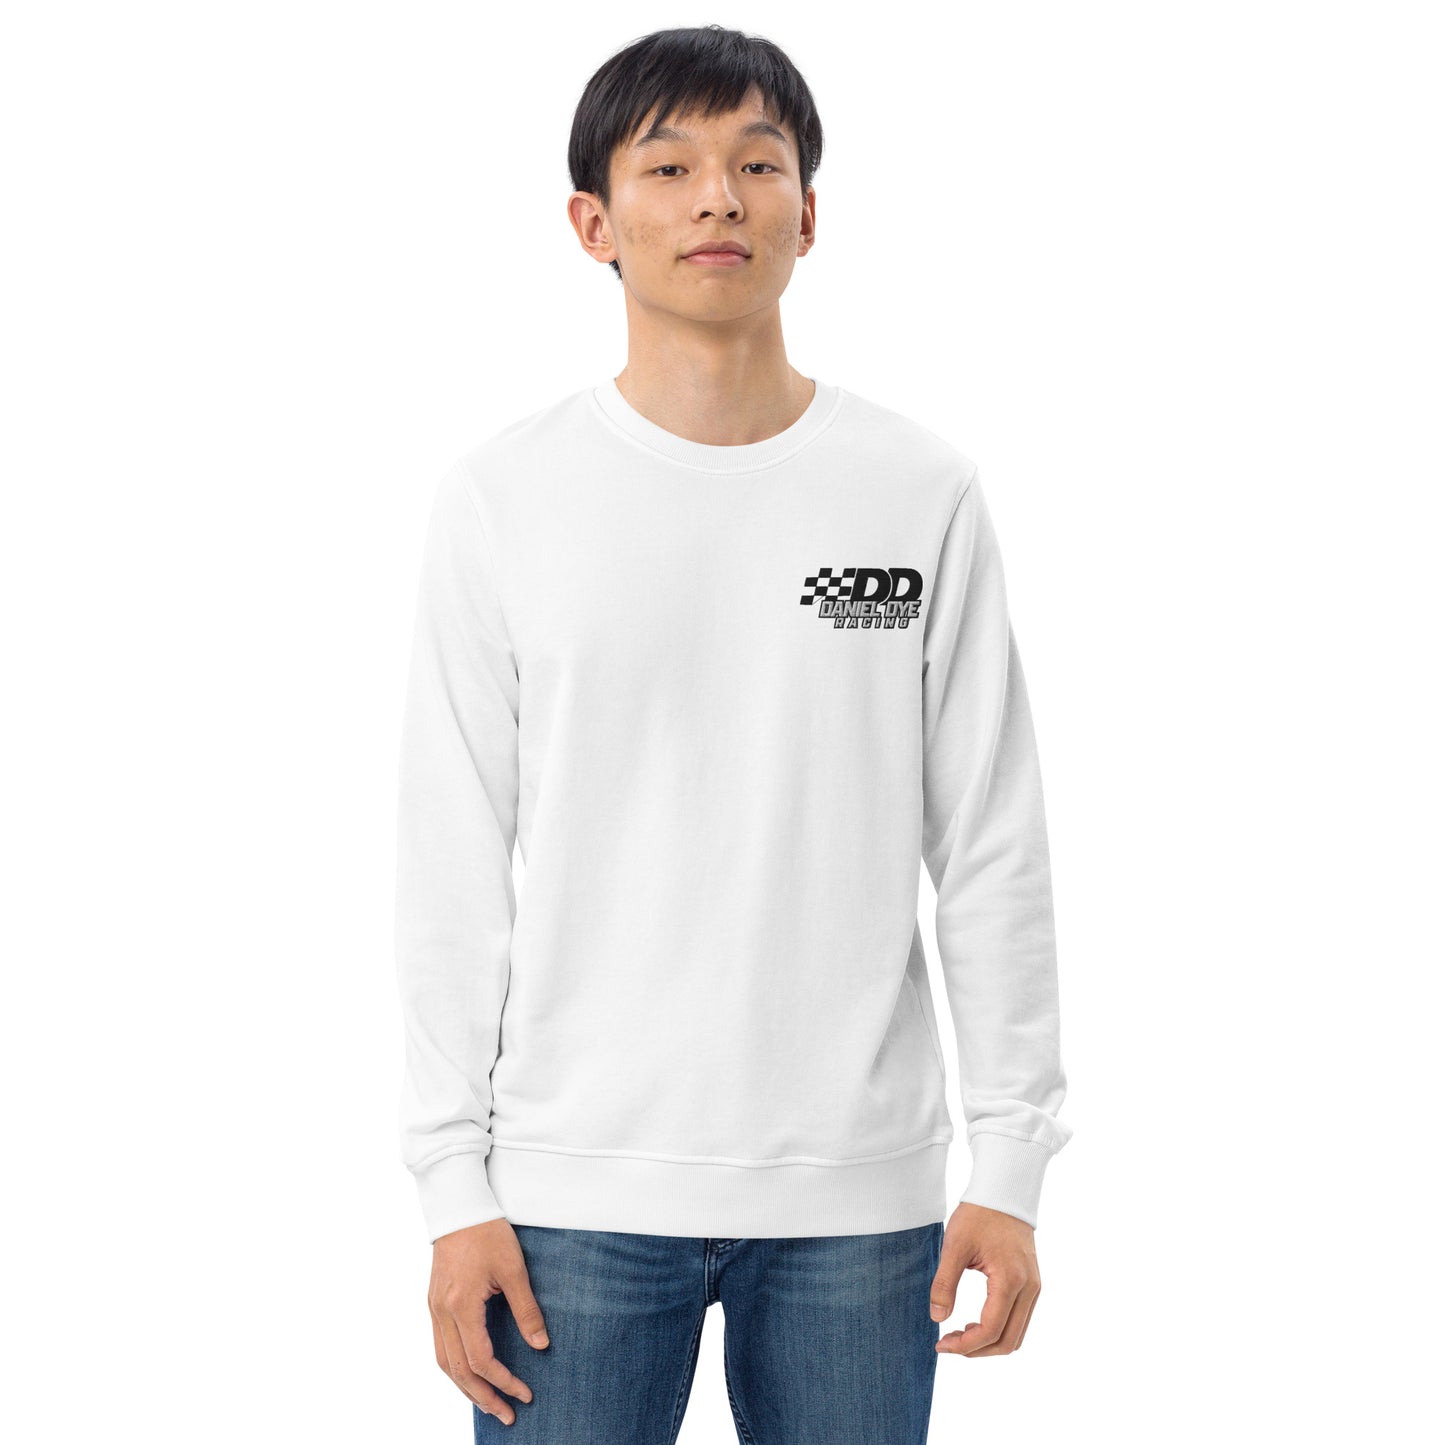 Unisex organic sweatshirt - [Daniel Dye Racing Shop]